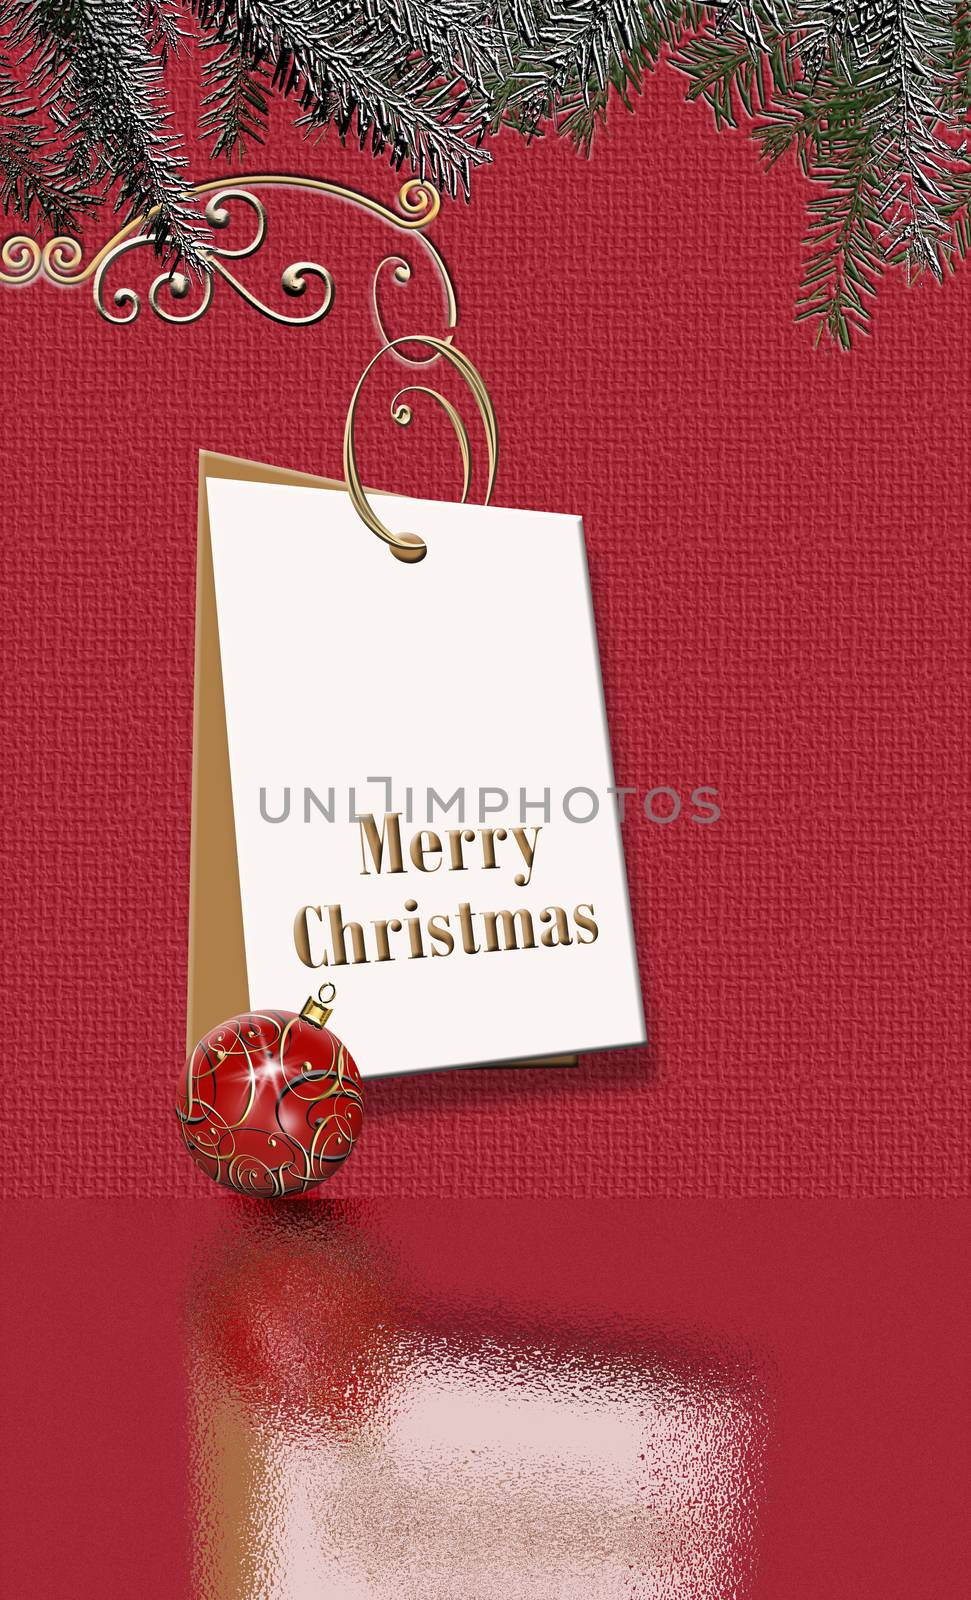 Christmas card with festive tag by NelliPolk